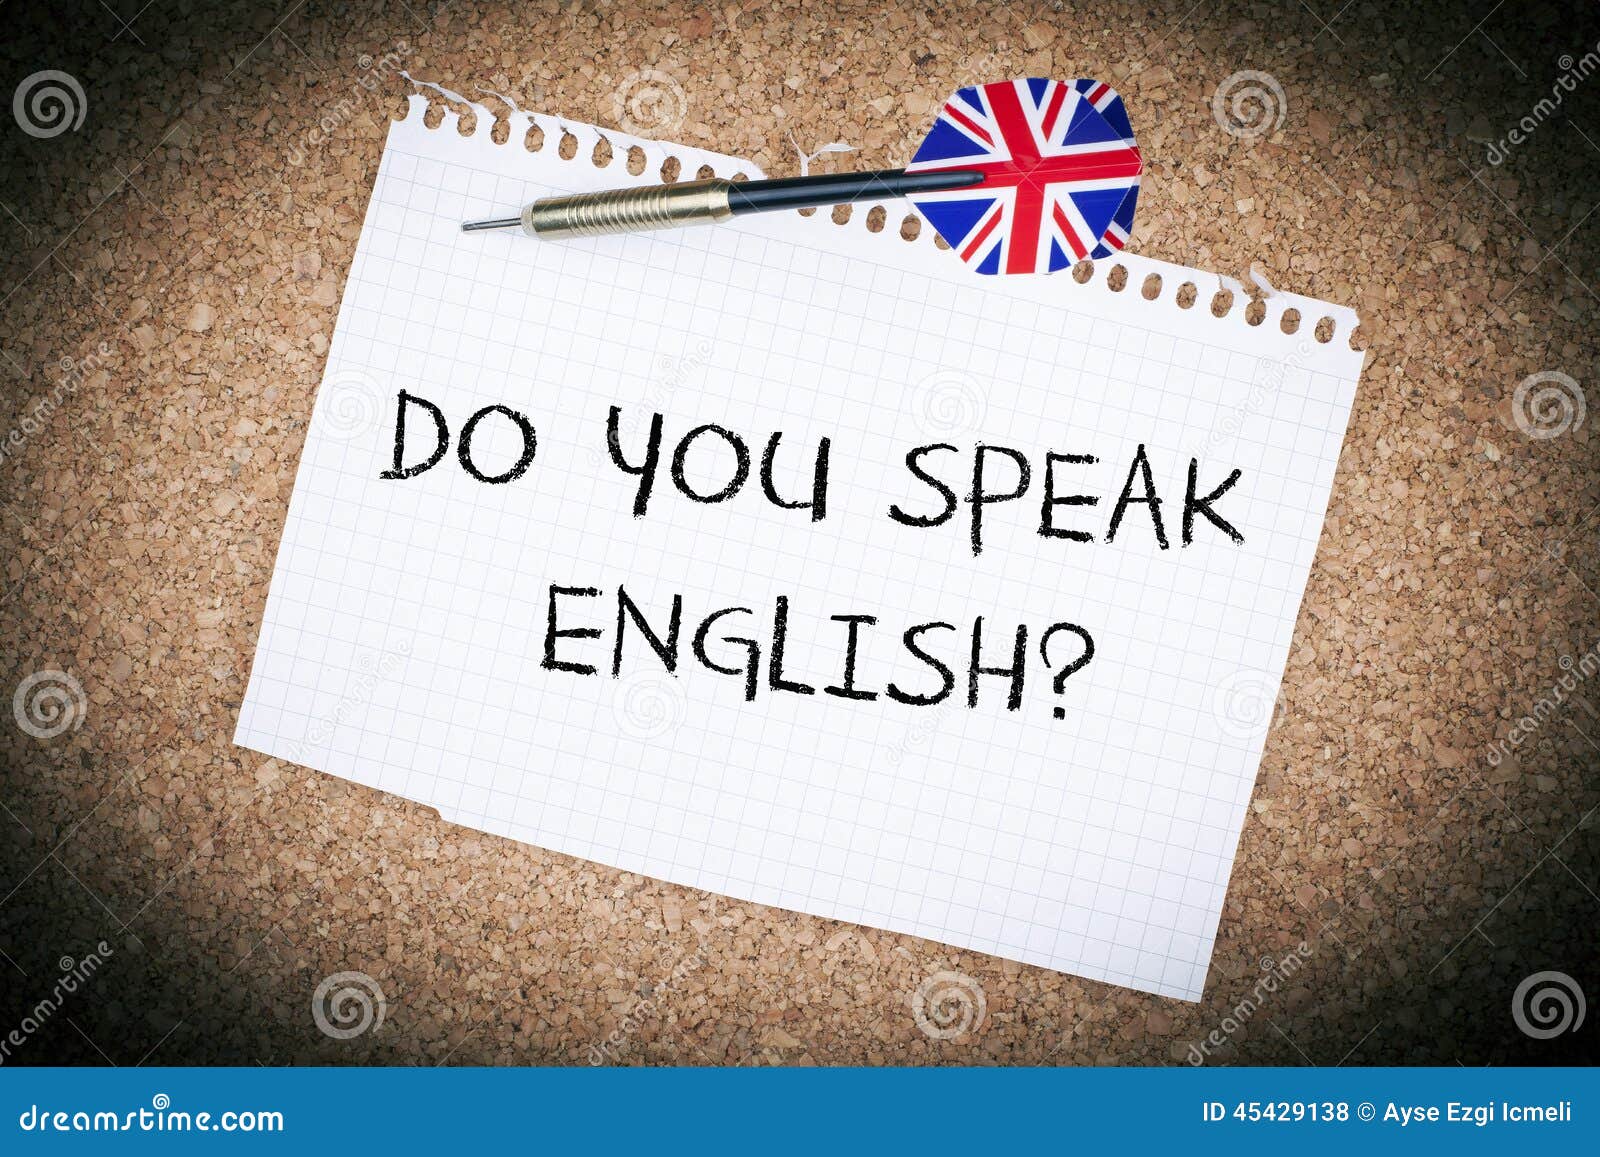 Do you speak english well. Английский do you speak English. Do you speak English картинки. Do you speak English надпись. Плакат do you speak English.